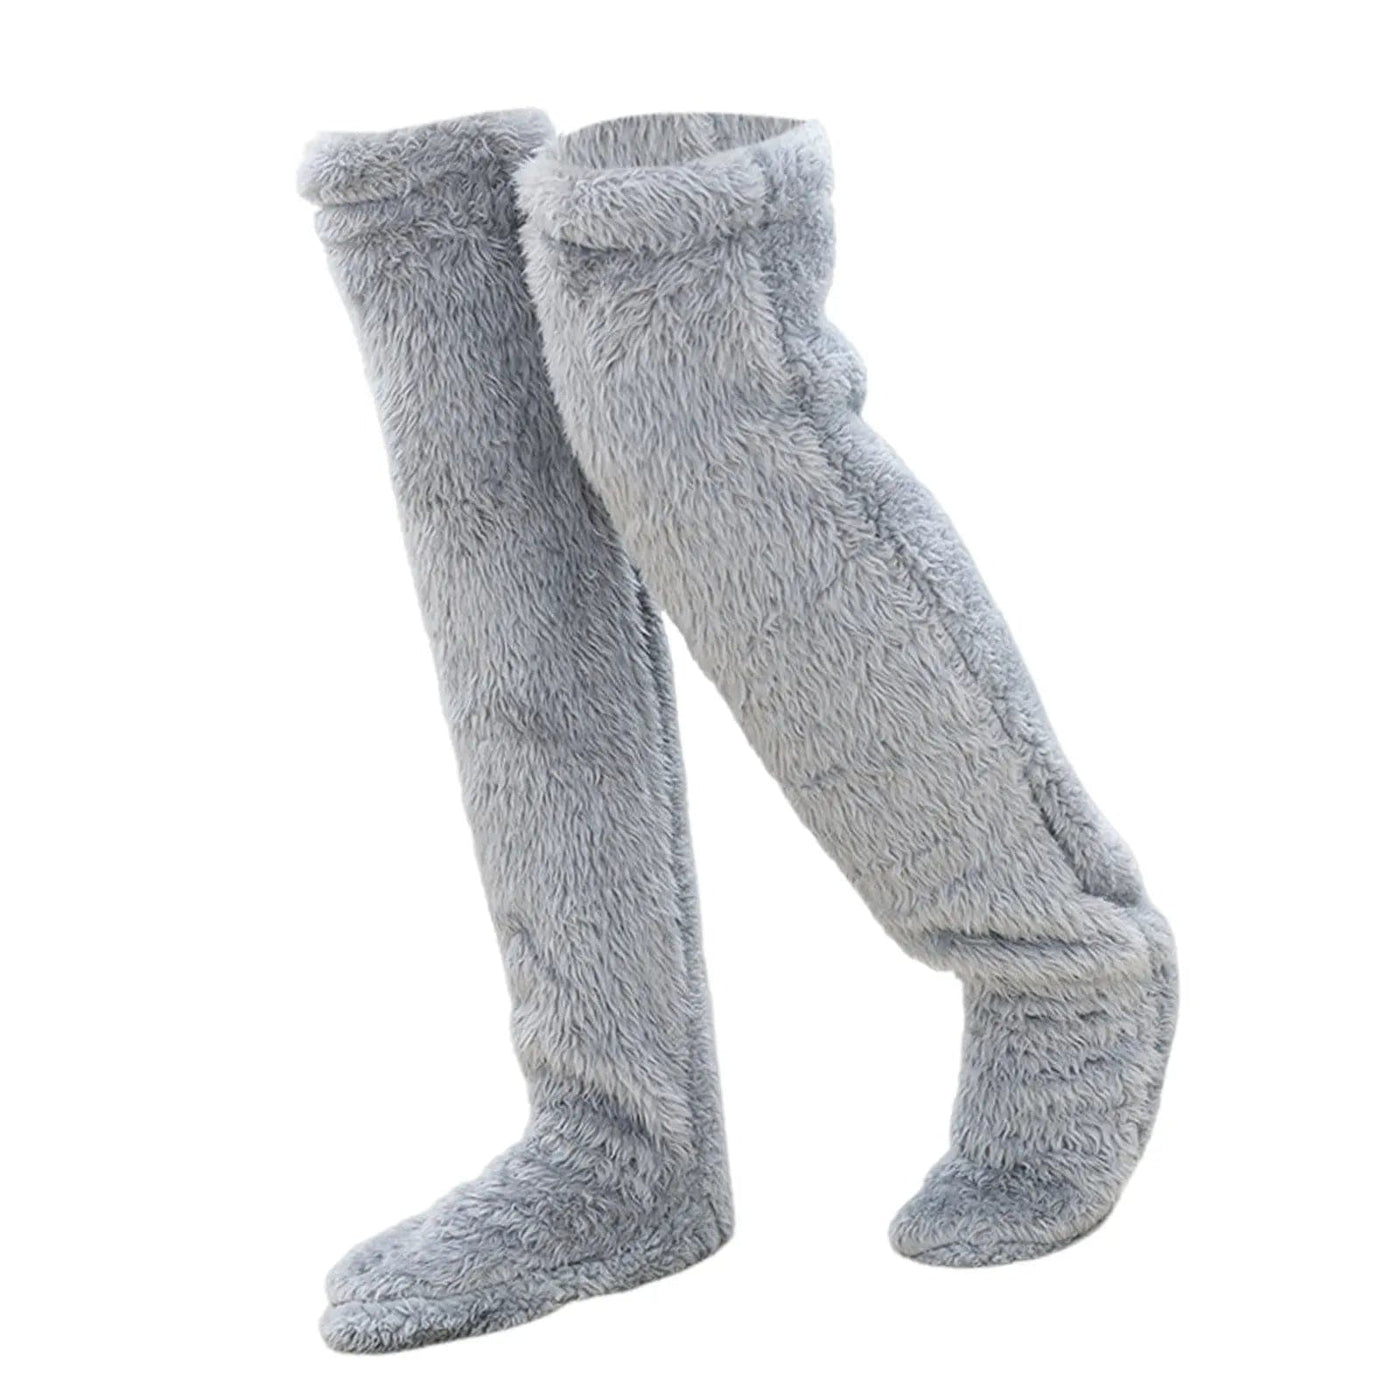 wickedafstore Fluffy Coral Fleece Women's Long Socks  Warm Plush Socks for Women Winter Soft Indoor Floor Towel Socks New Year Gift Christmas